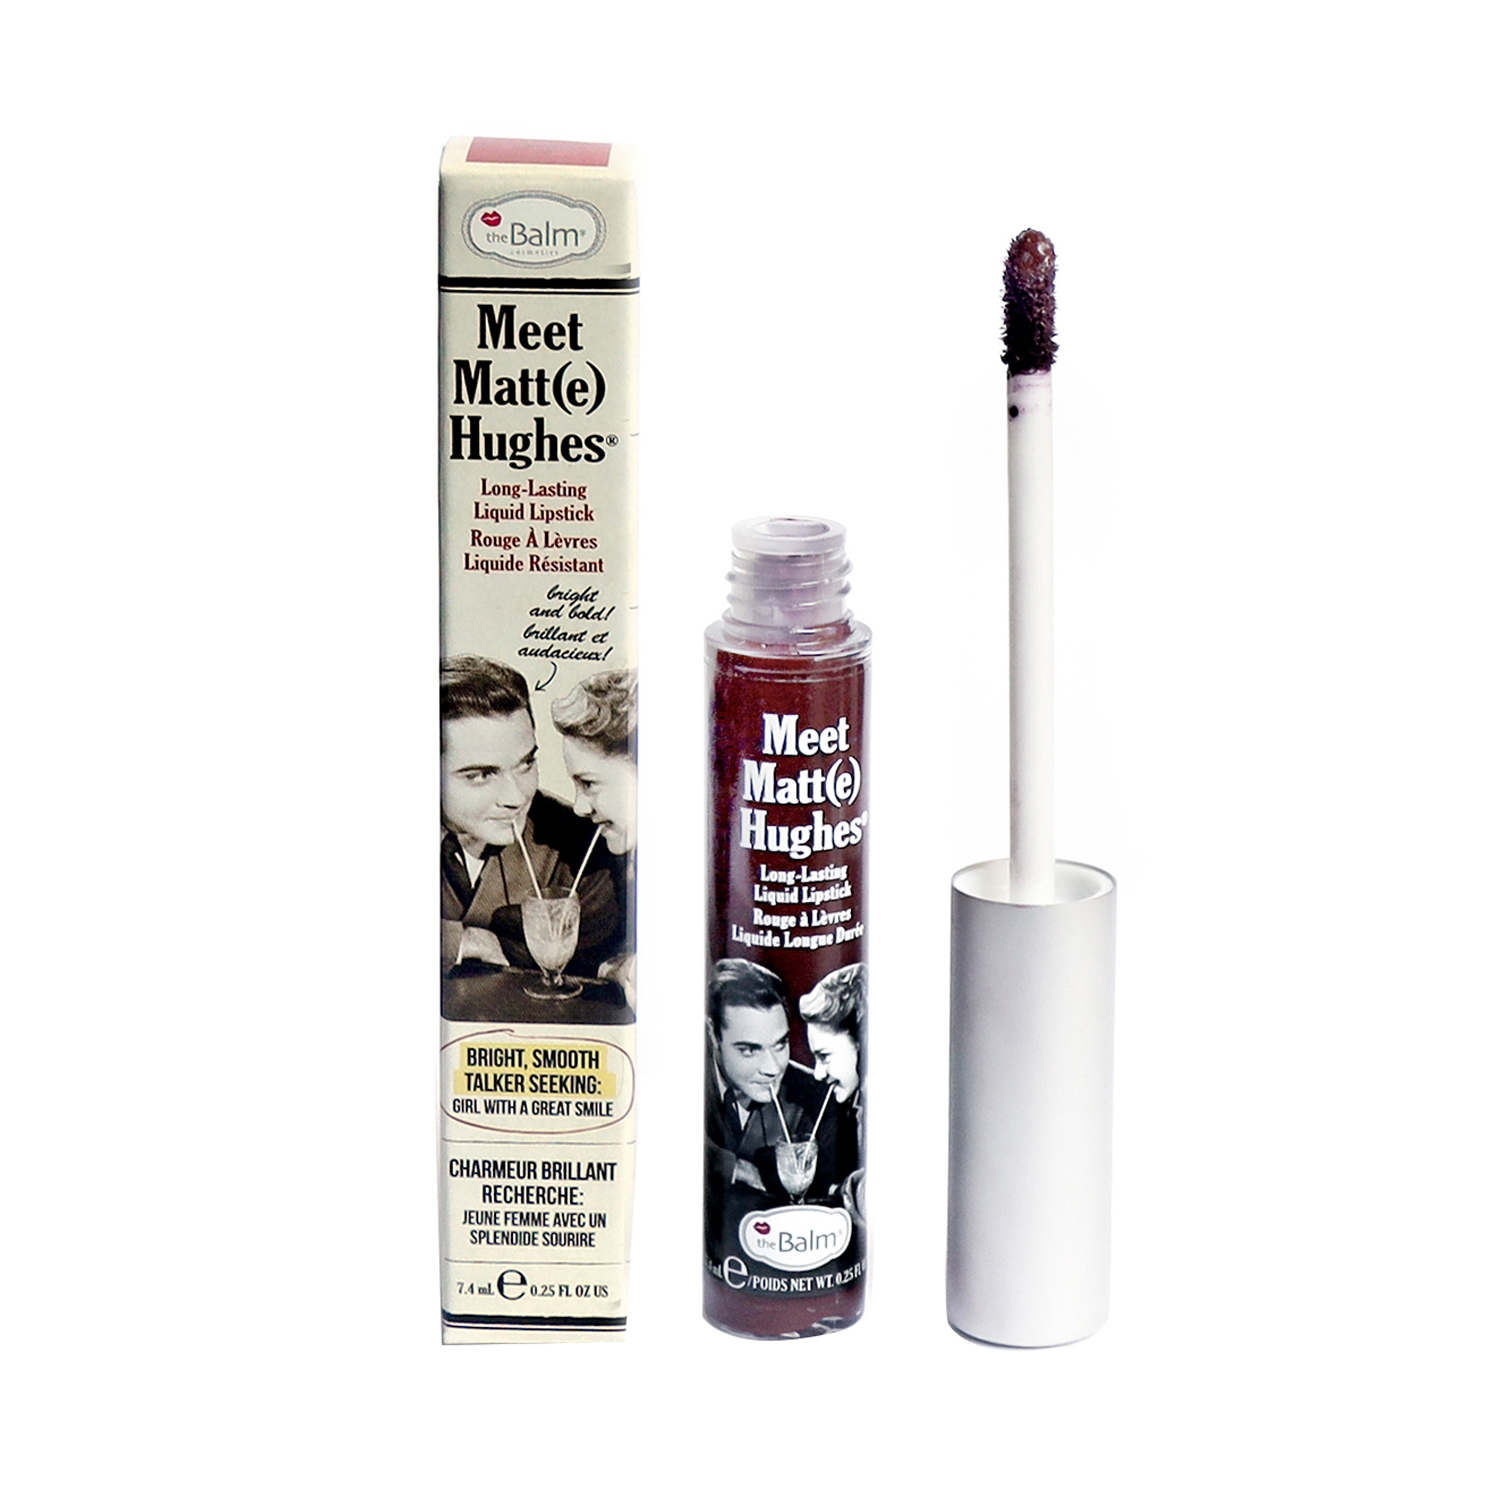 theBalm Cosmetics | theBalm Cosmetics Meet Matte Hughes Liquid Lipstick - Fierce (7.4ml)